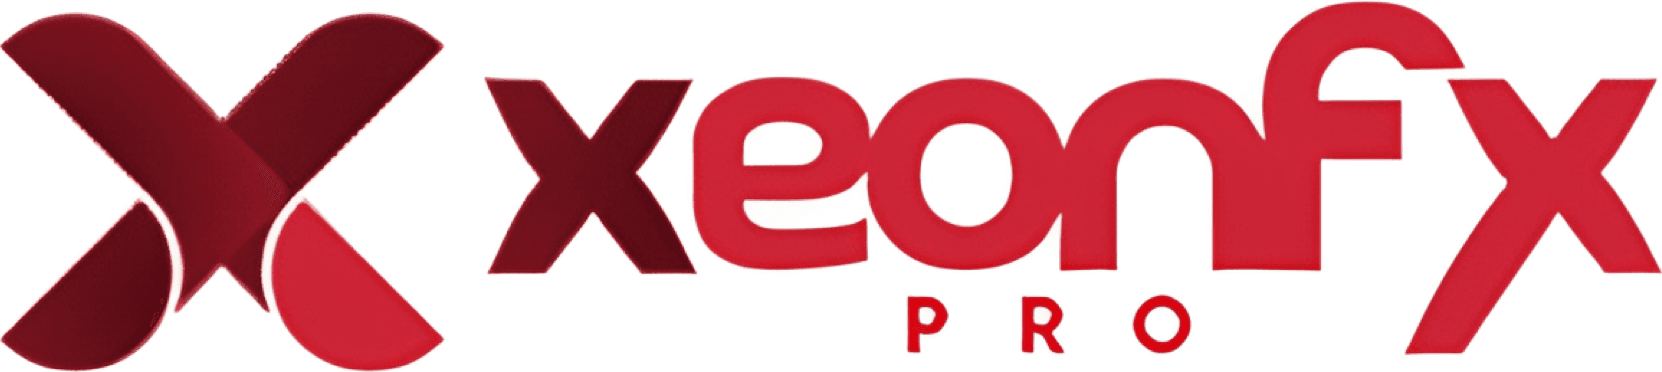 XeonFx Pro